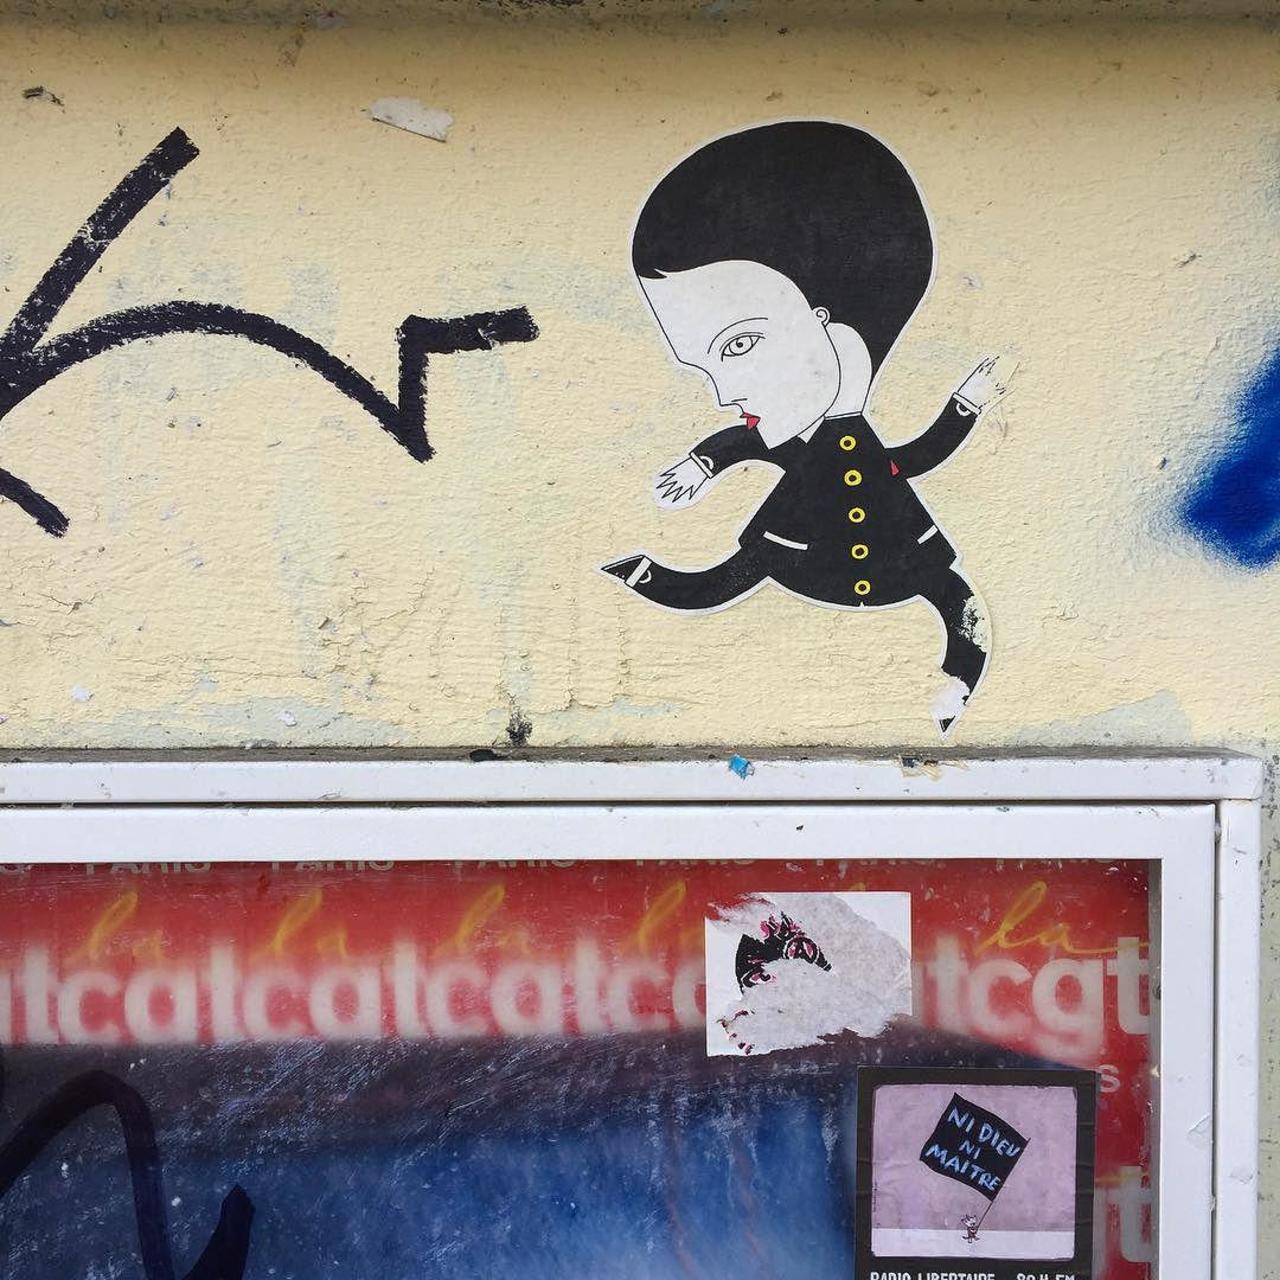 #Paris #graffiti photo by @hookedblog http://ift.tt/1iVZy3o #StreetArt http://t.co/1EK2aAYJY8